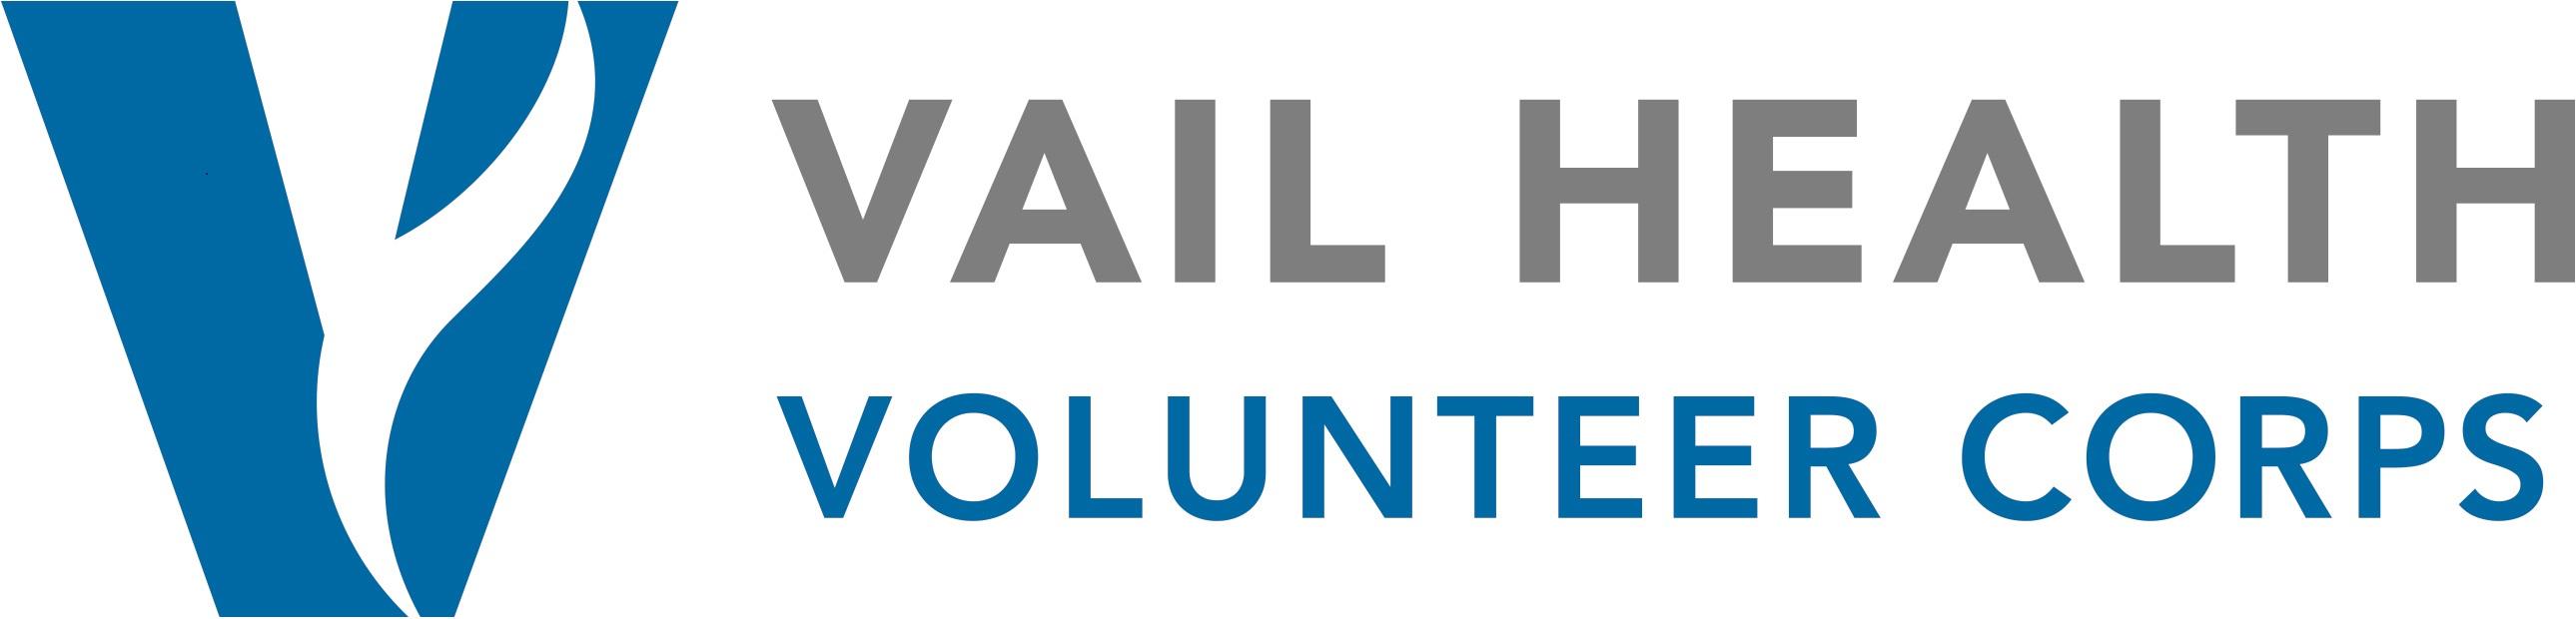 Vail Health Volunteer Corps Login